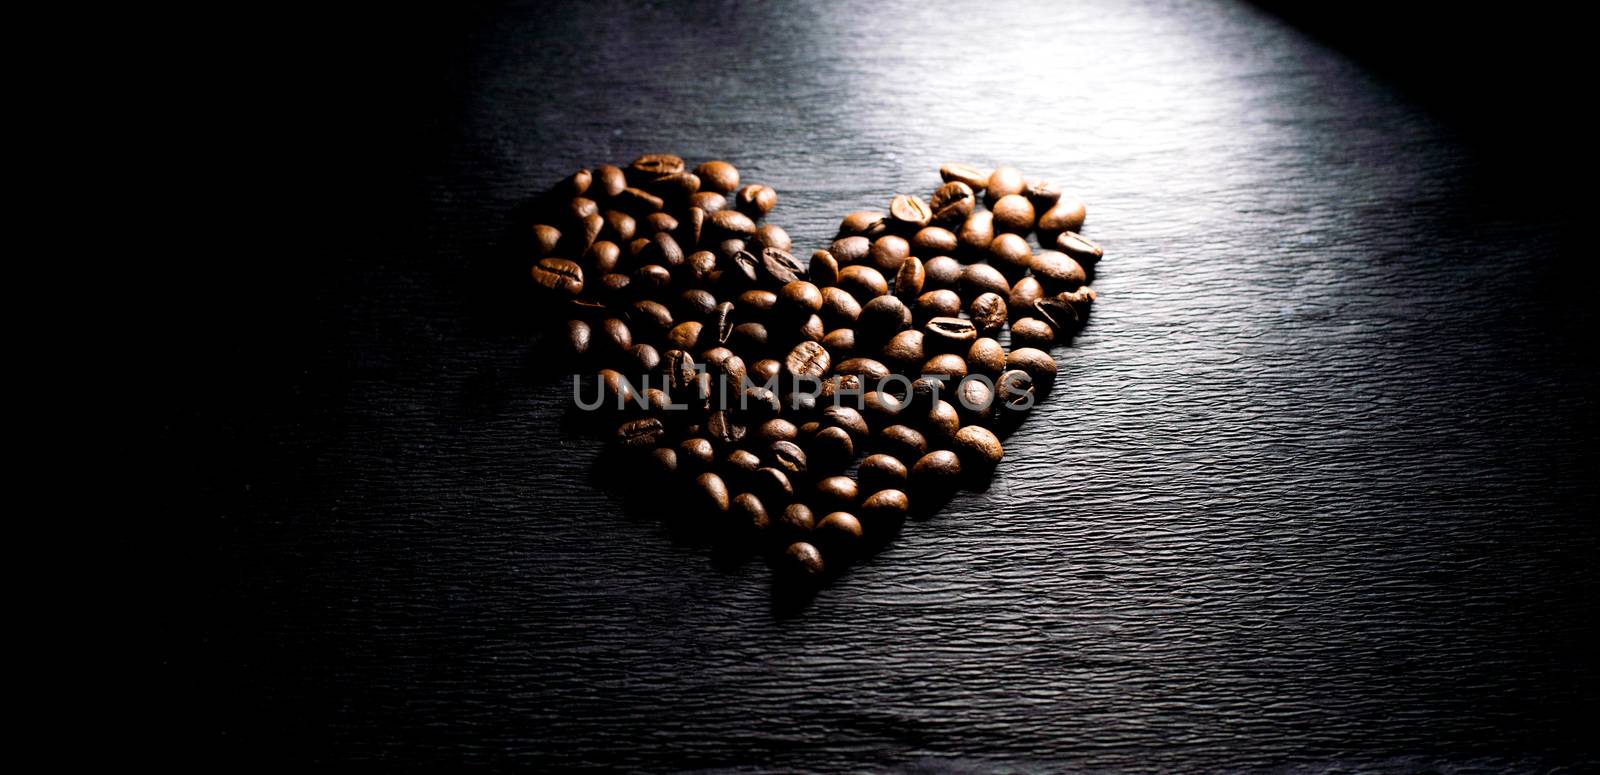 Heart shaped coffee beans by SemFid